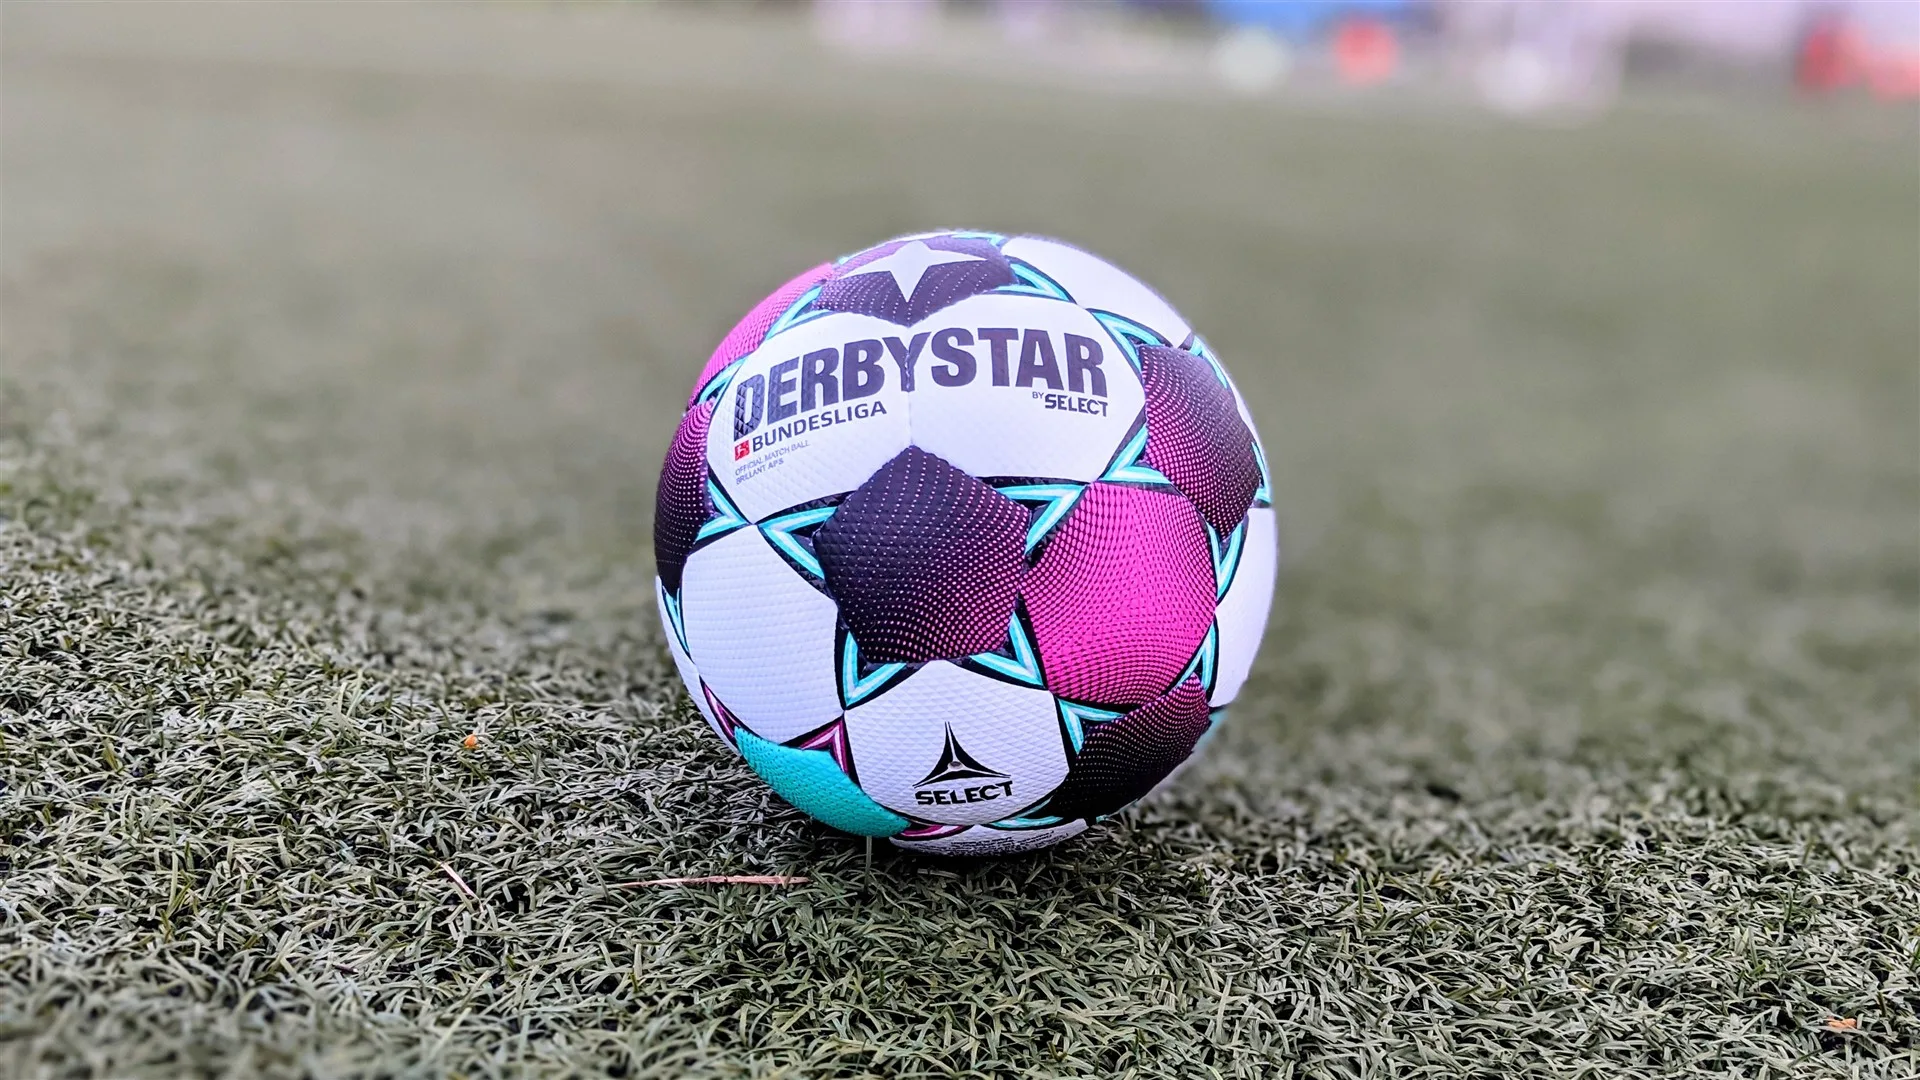 Derbystar by Select Bundesliga Official Match Ball